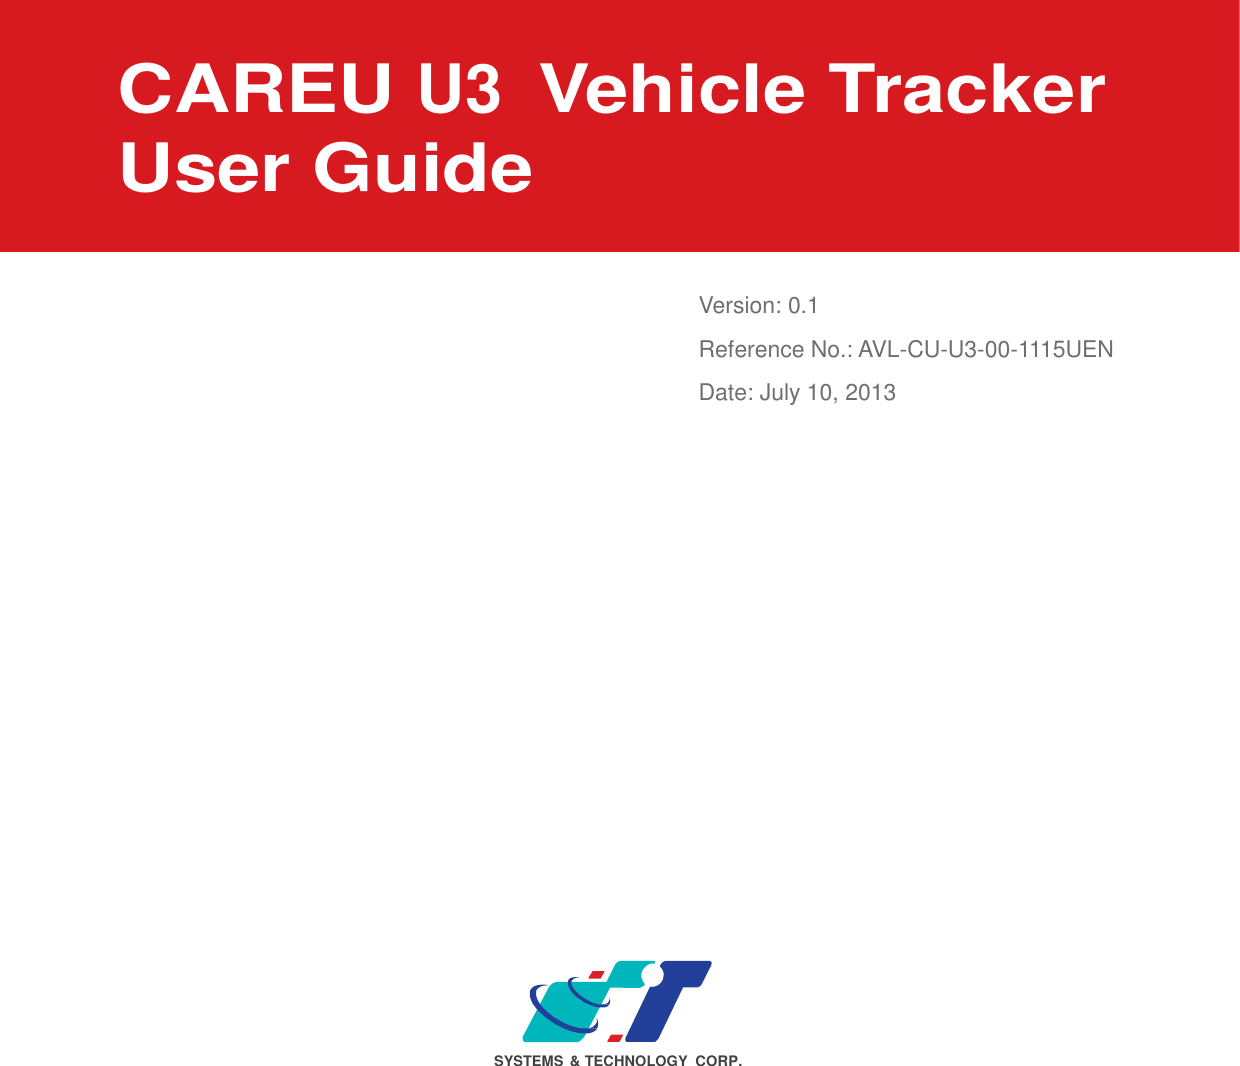                       CAREU U3 Vehicle Tracker User Guide     Version: 0.1 Reference No.: AVL-CU-U3-00-1115UEN Date: July 10, 2013                                SYSTEMS  &amp; TECHNOLOGY CORP. 